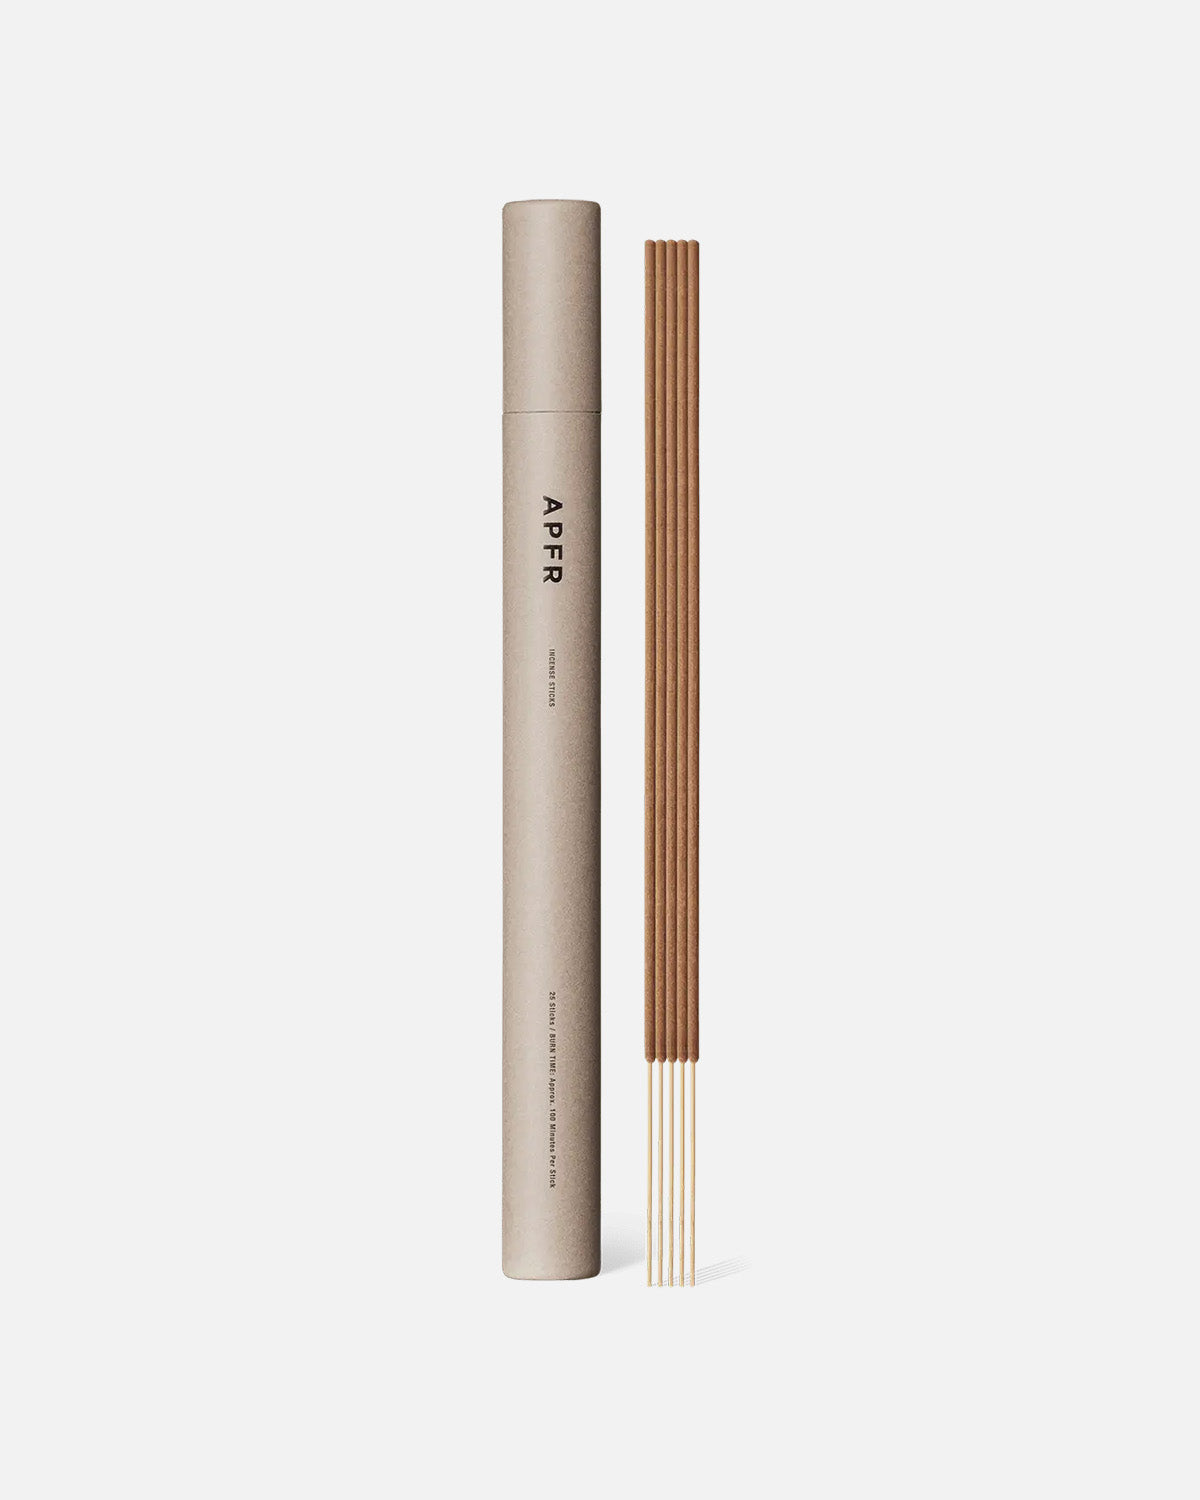 APFR Incense Sticks